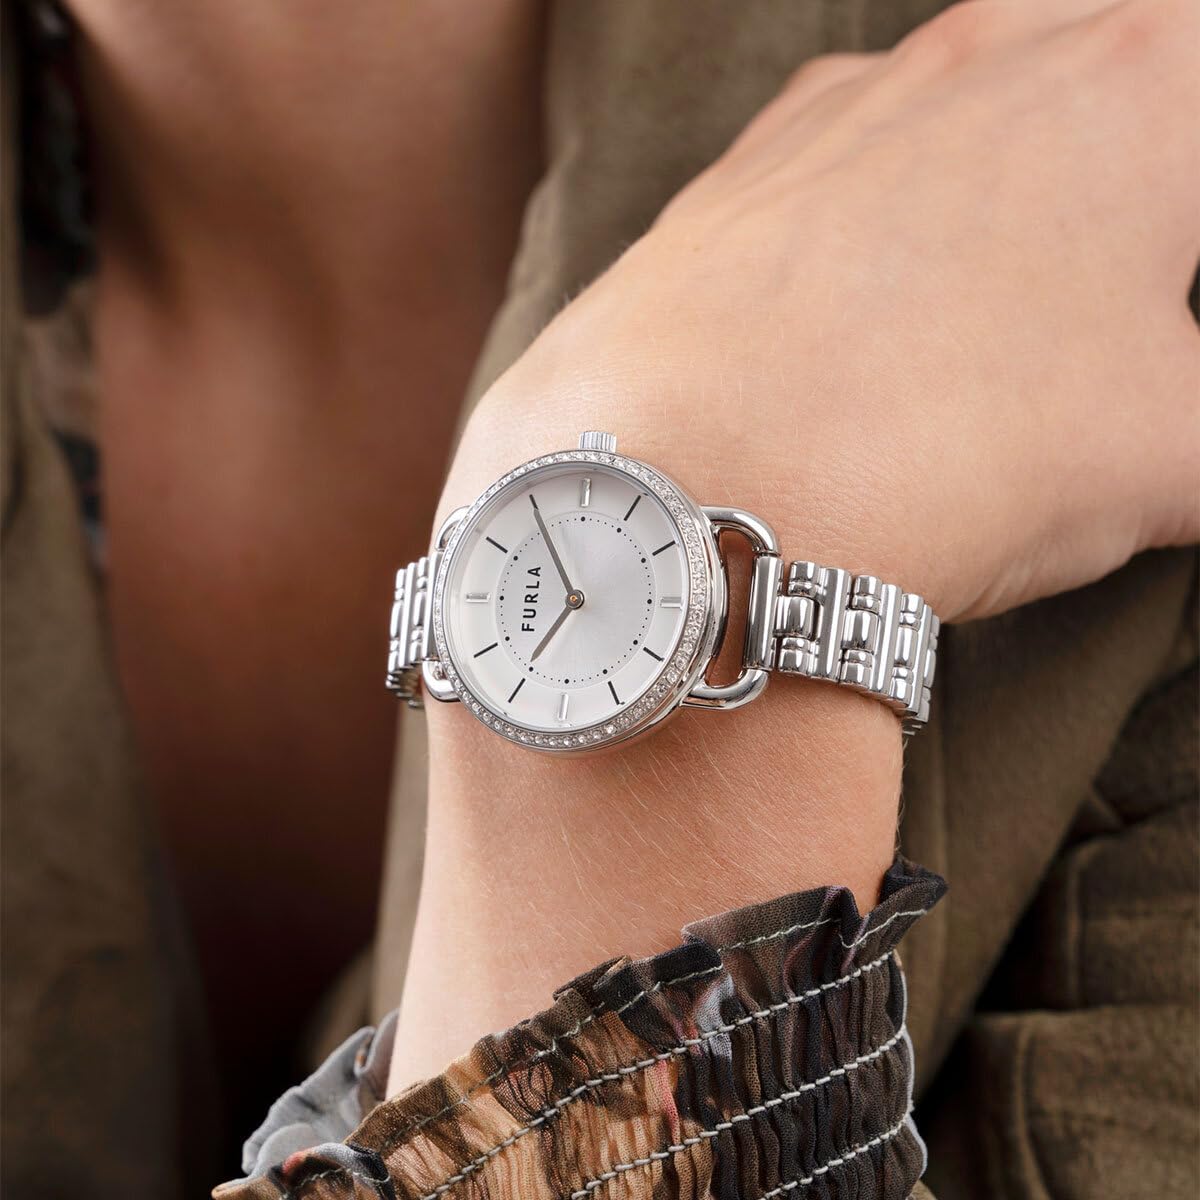 FURLA Ladies Silver Tone Stainless Steel Bracelet Watch WW00021012L1